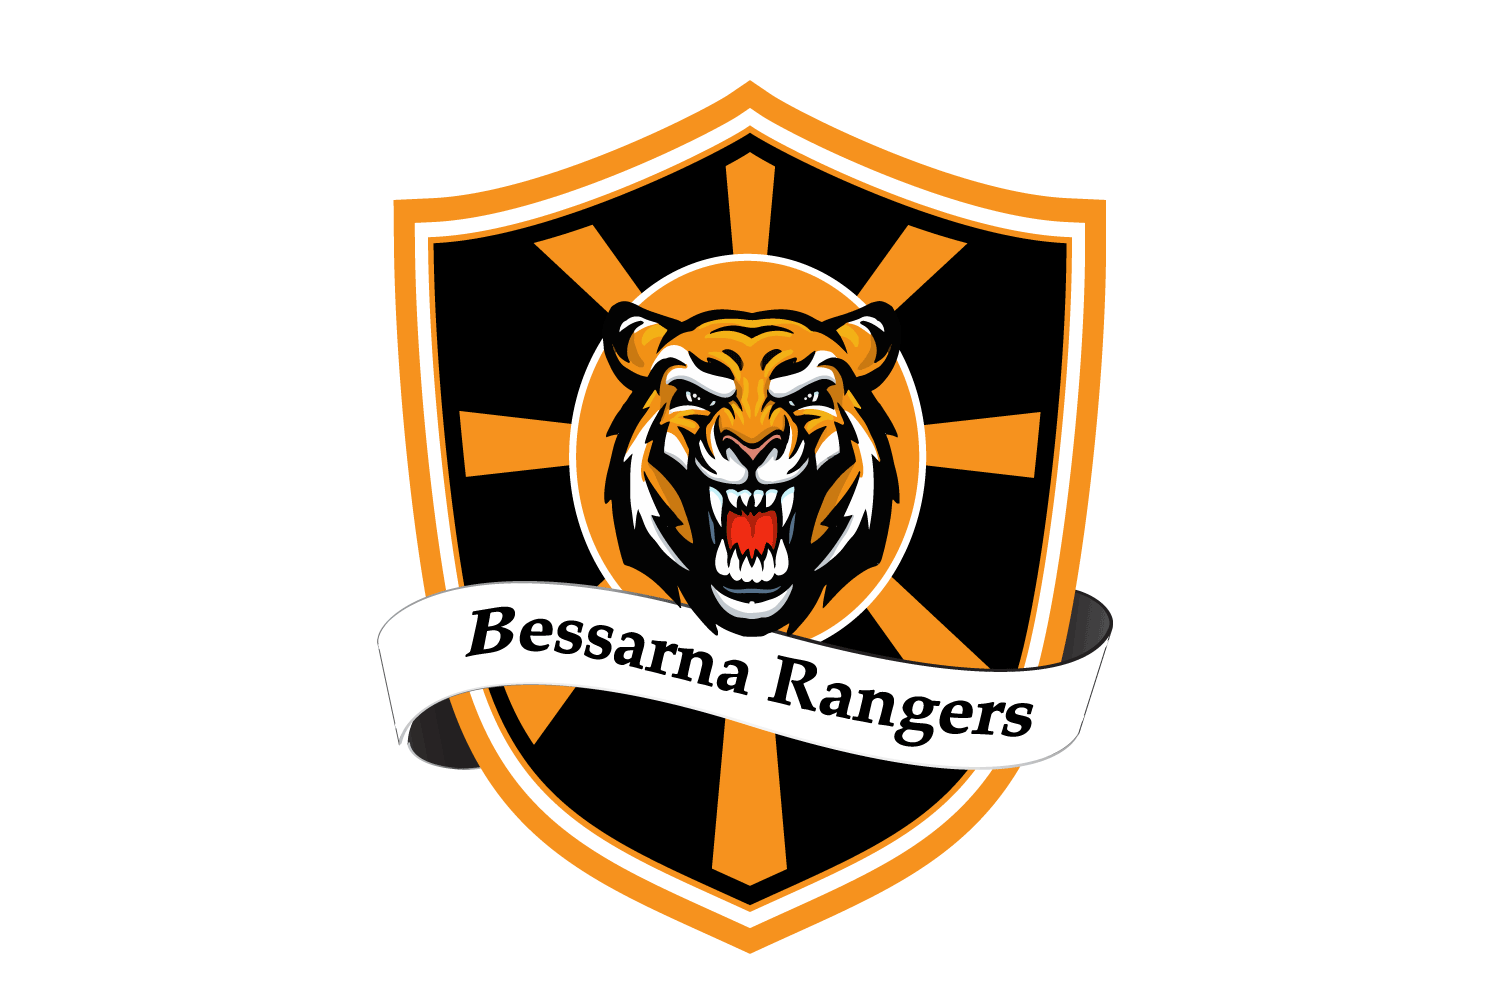 The Bessarna Supporters Club-logo